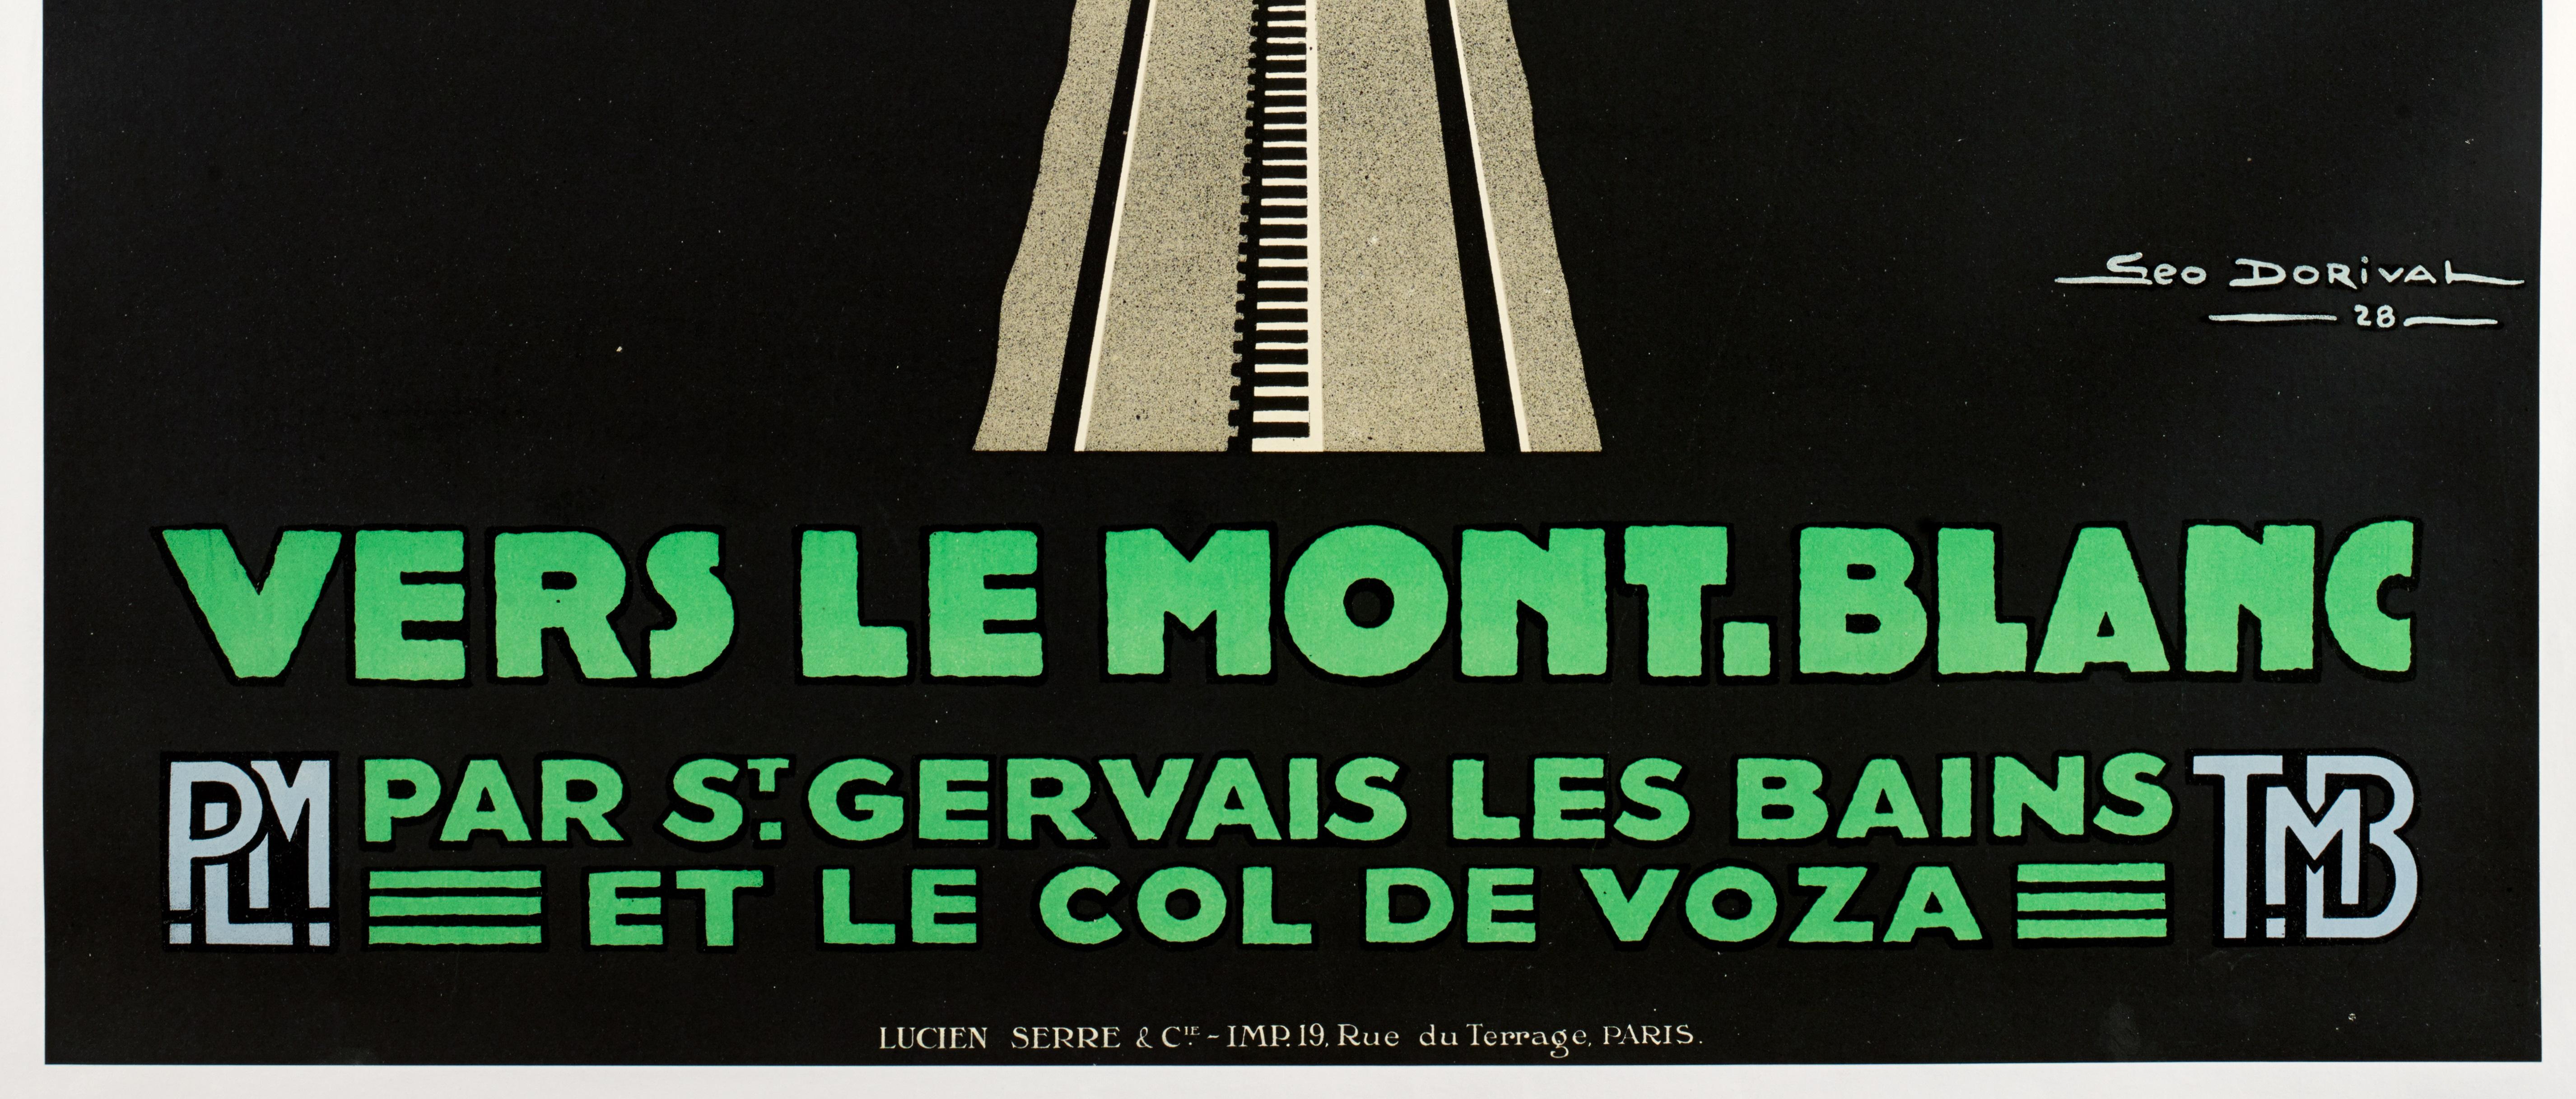 French Geo Dorival, Set of 3 Original PLM Poster, Le Mont-Blanc, Mountain Art Deco 1928 For Sale